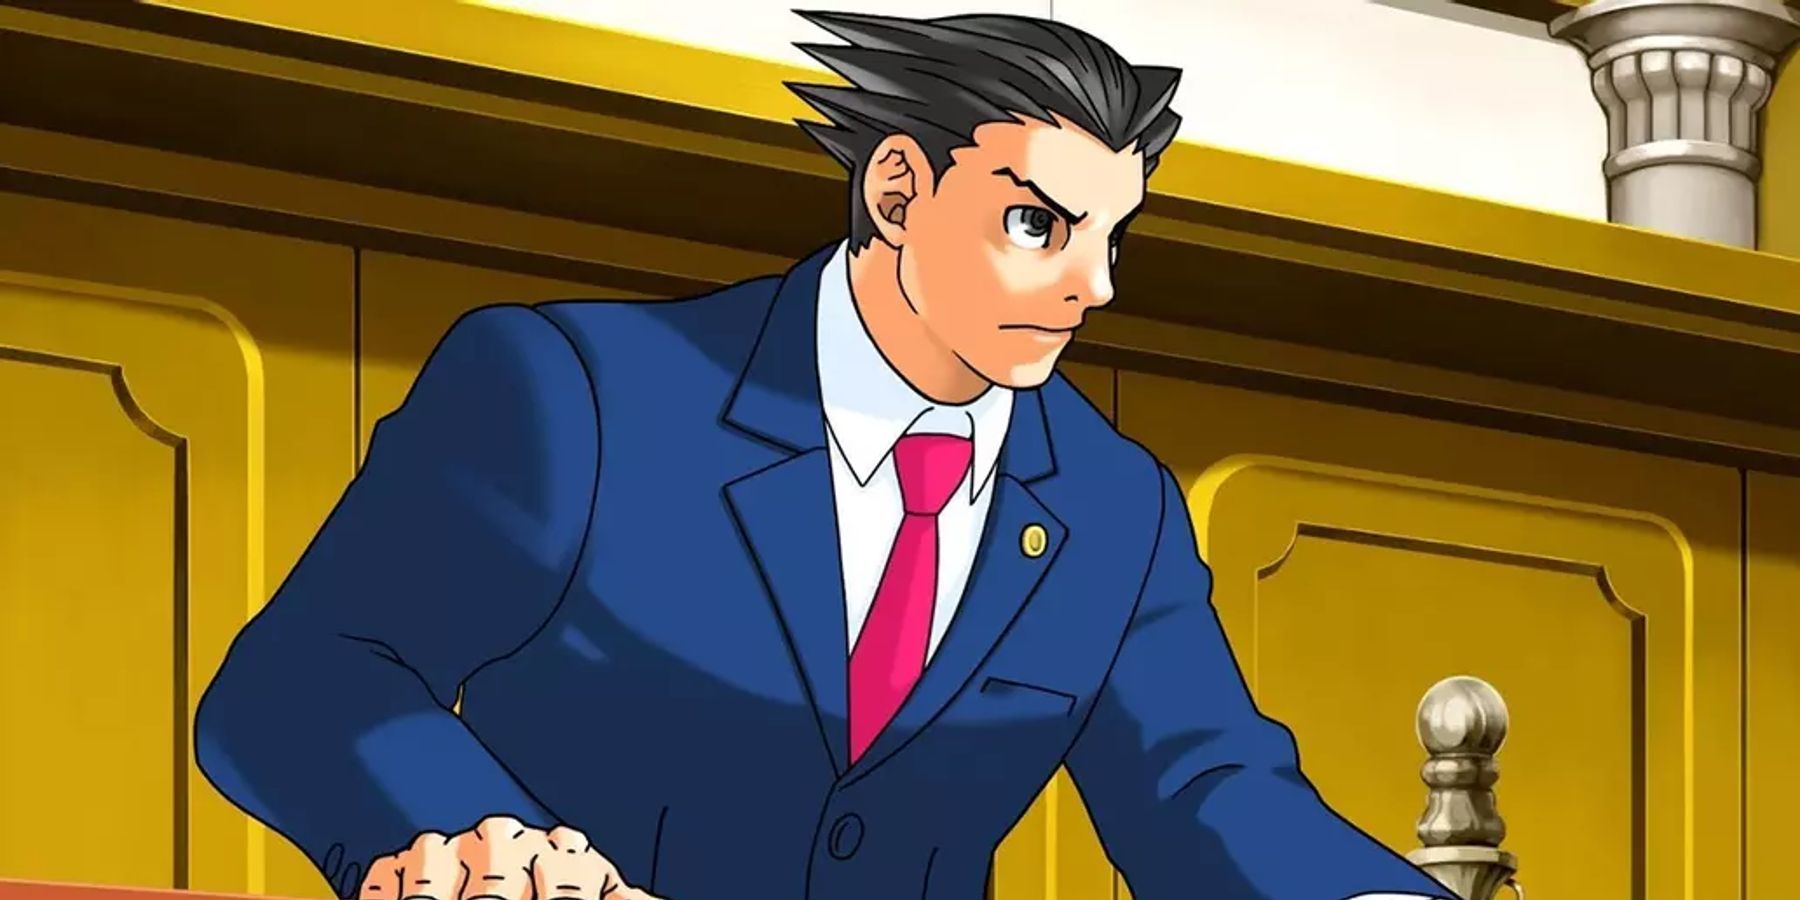 ace attorney  Ace, Phoenix wright, Visual novel